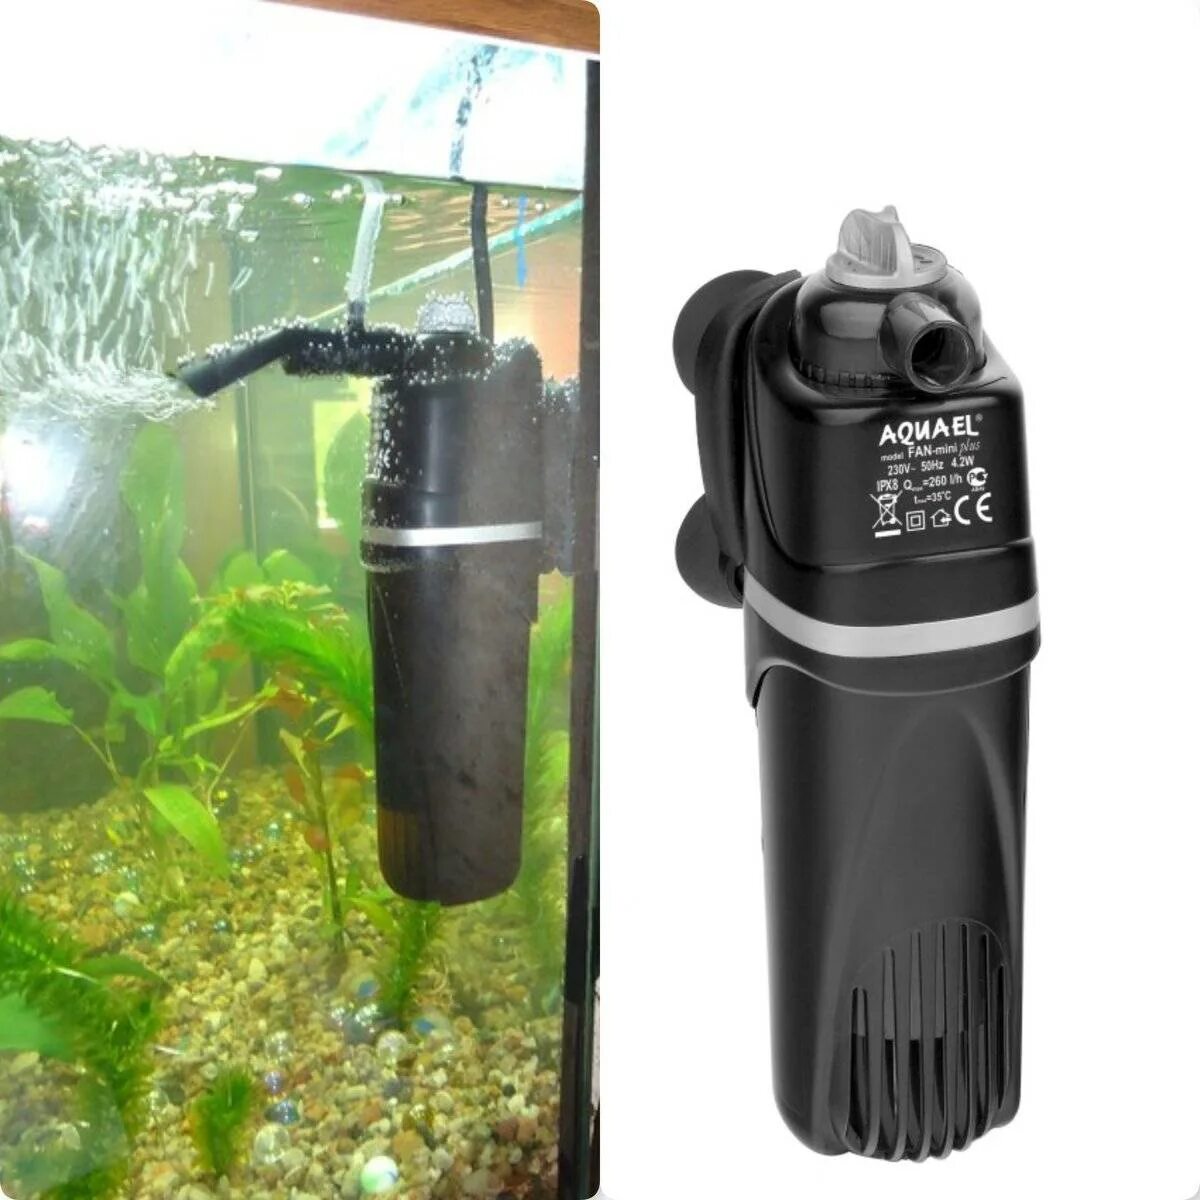 Aquael pat. Внешний фильтр Aquael для аквариума на 200 литров. Компрессор аквариумный акваэль. Фильтр аквариумный внешний dophh 700. Aquael Fan Mini Plus.